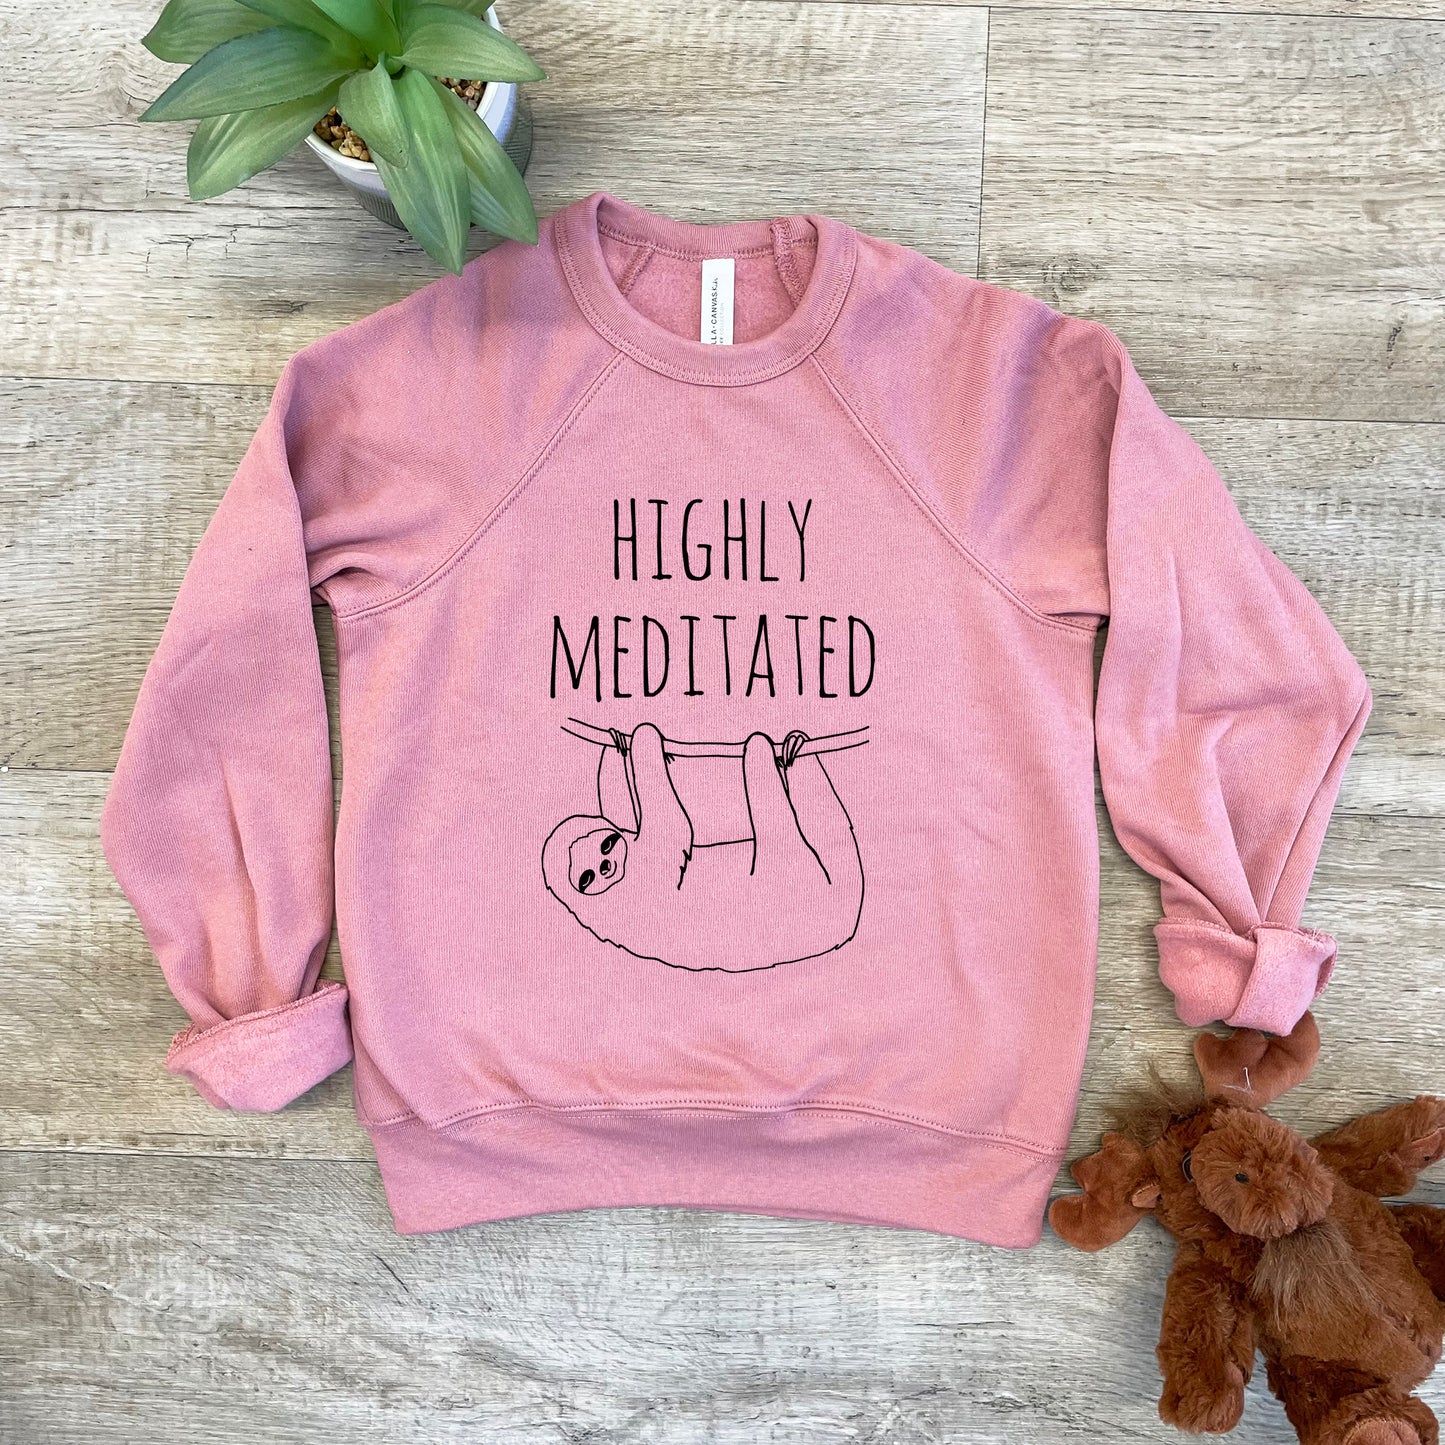 Highly Meditated (Sloth) - Kid's Sweatshirt - Heather Gray or Mauve